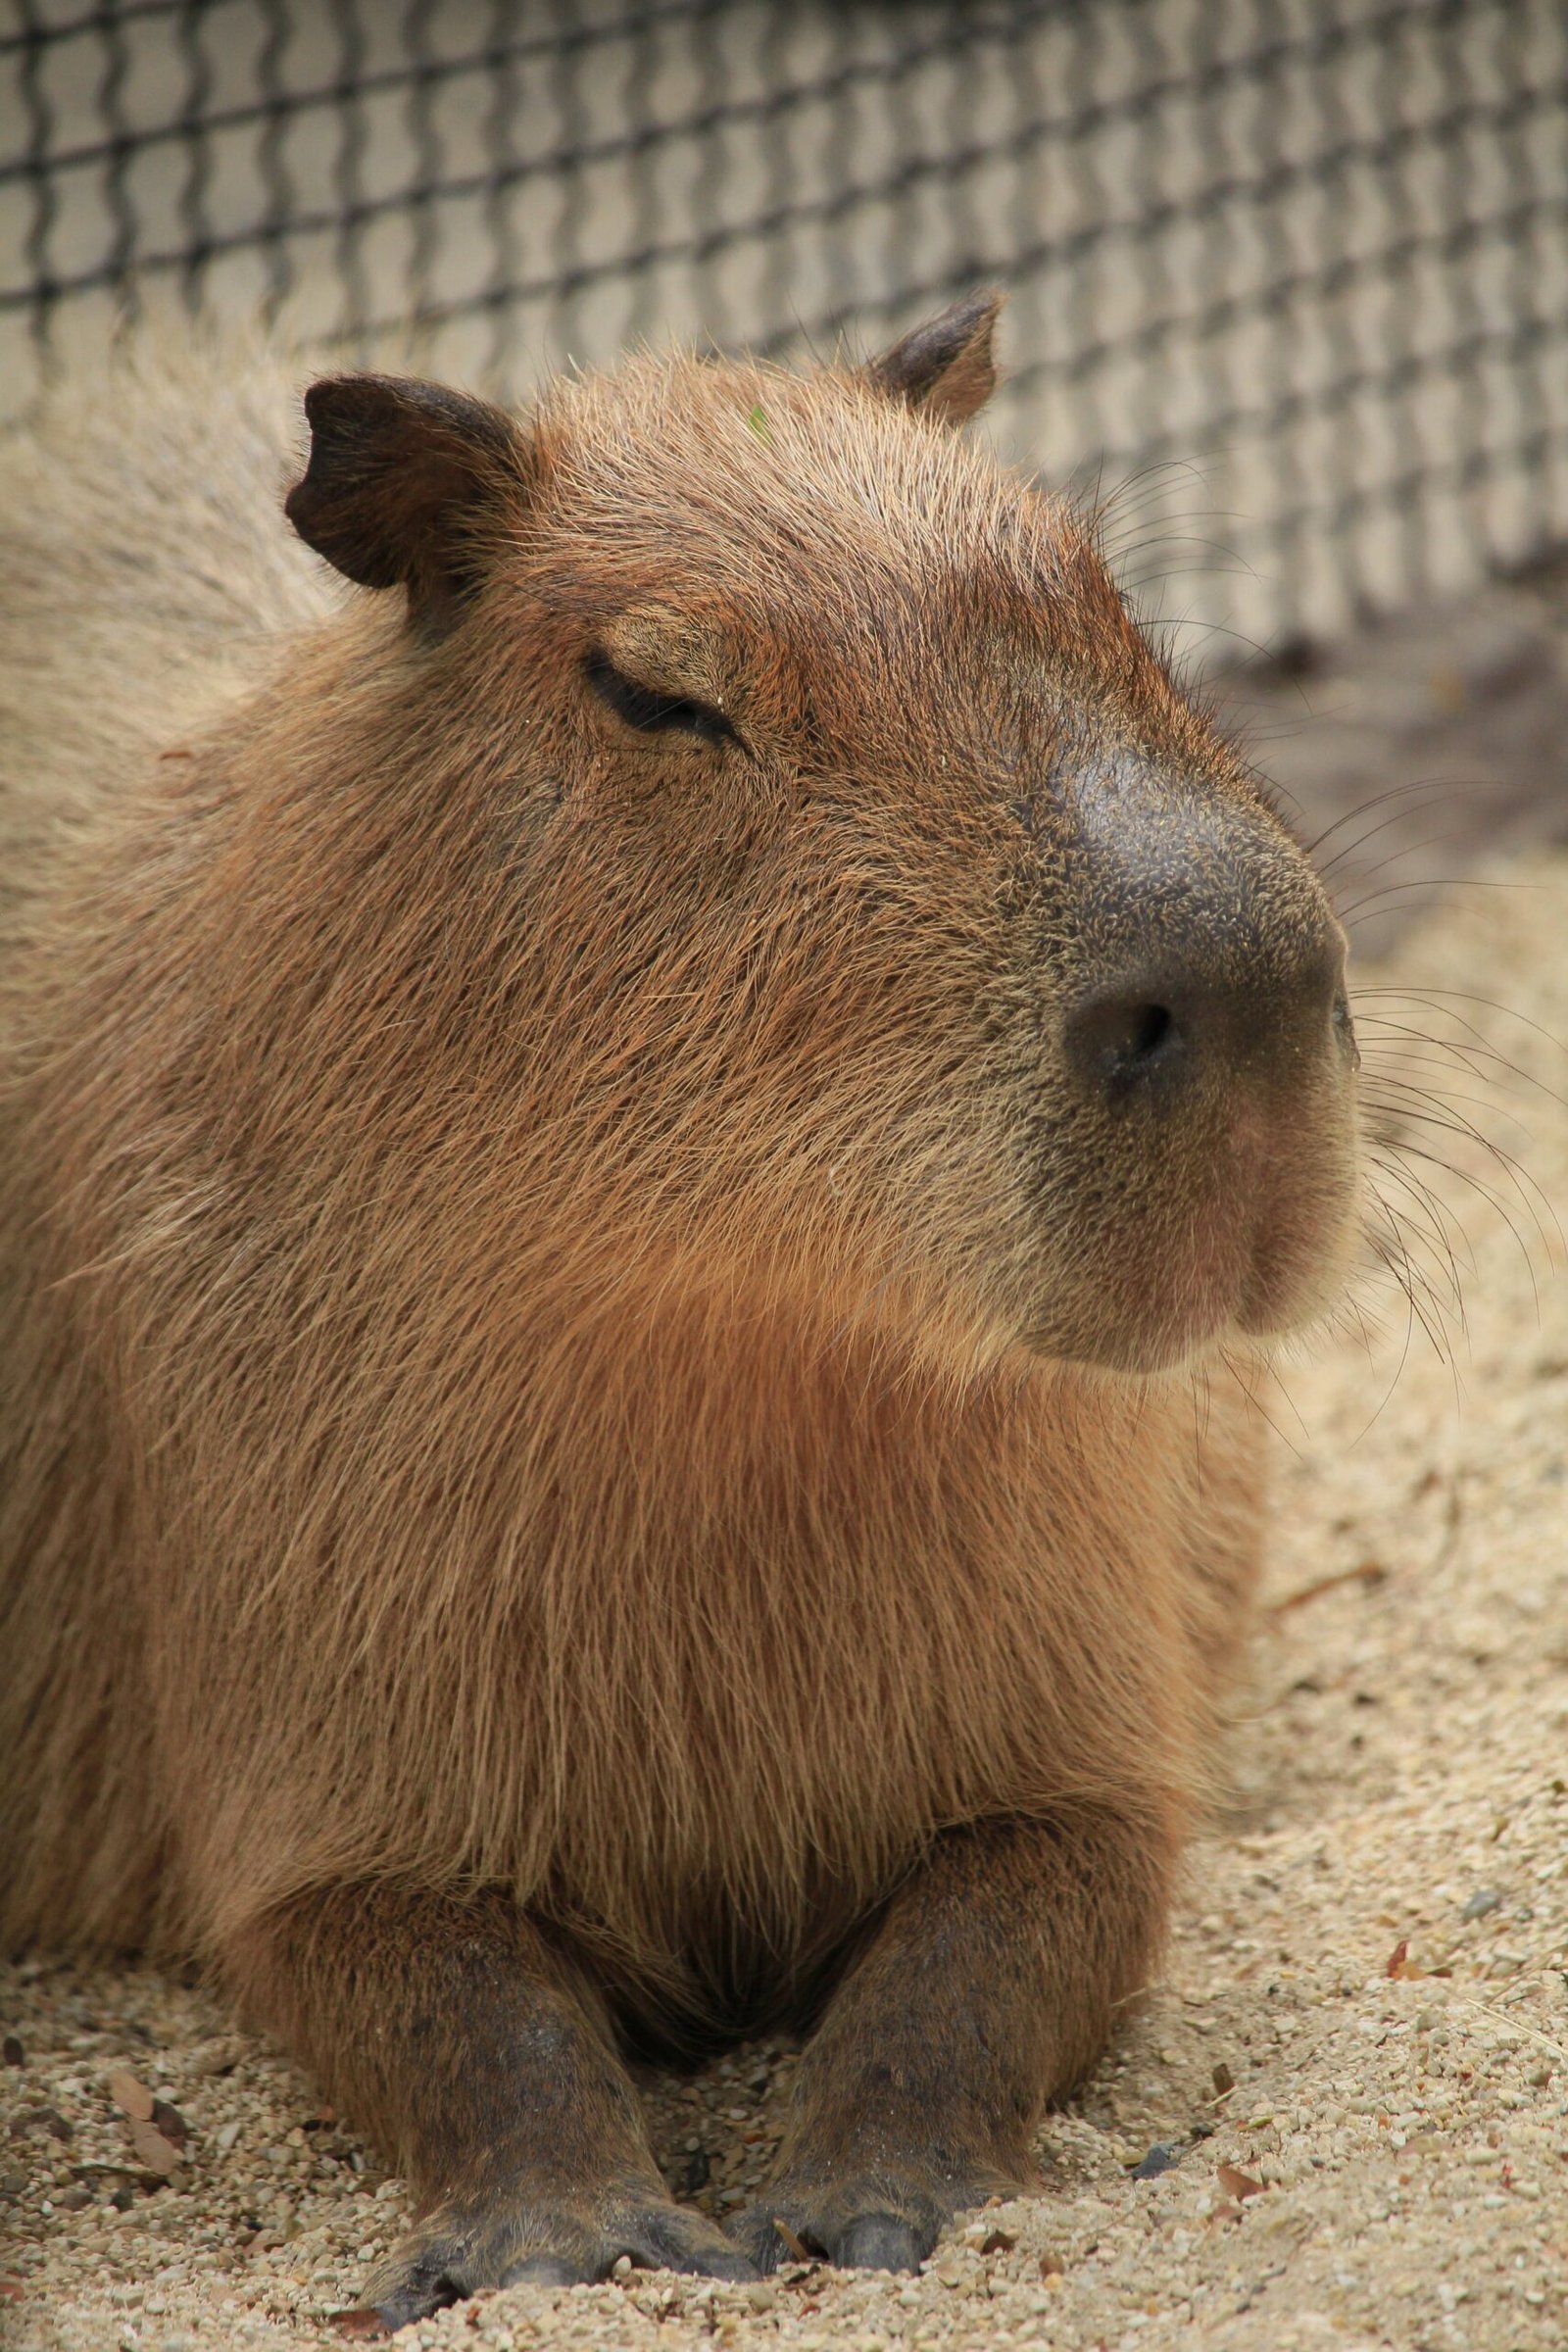 The Lifespan of Capybaras as Pets